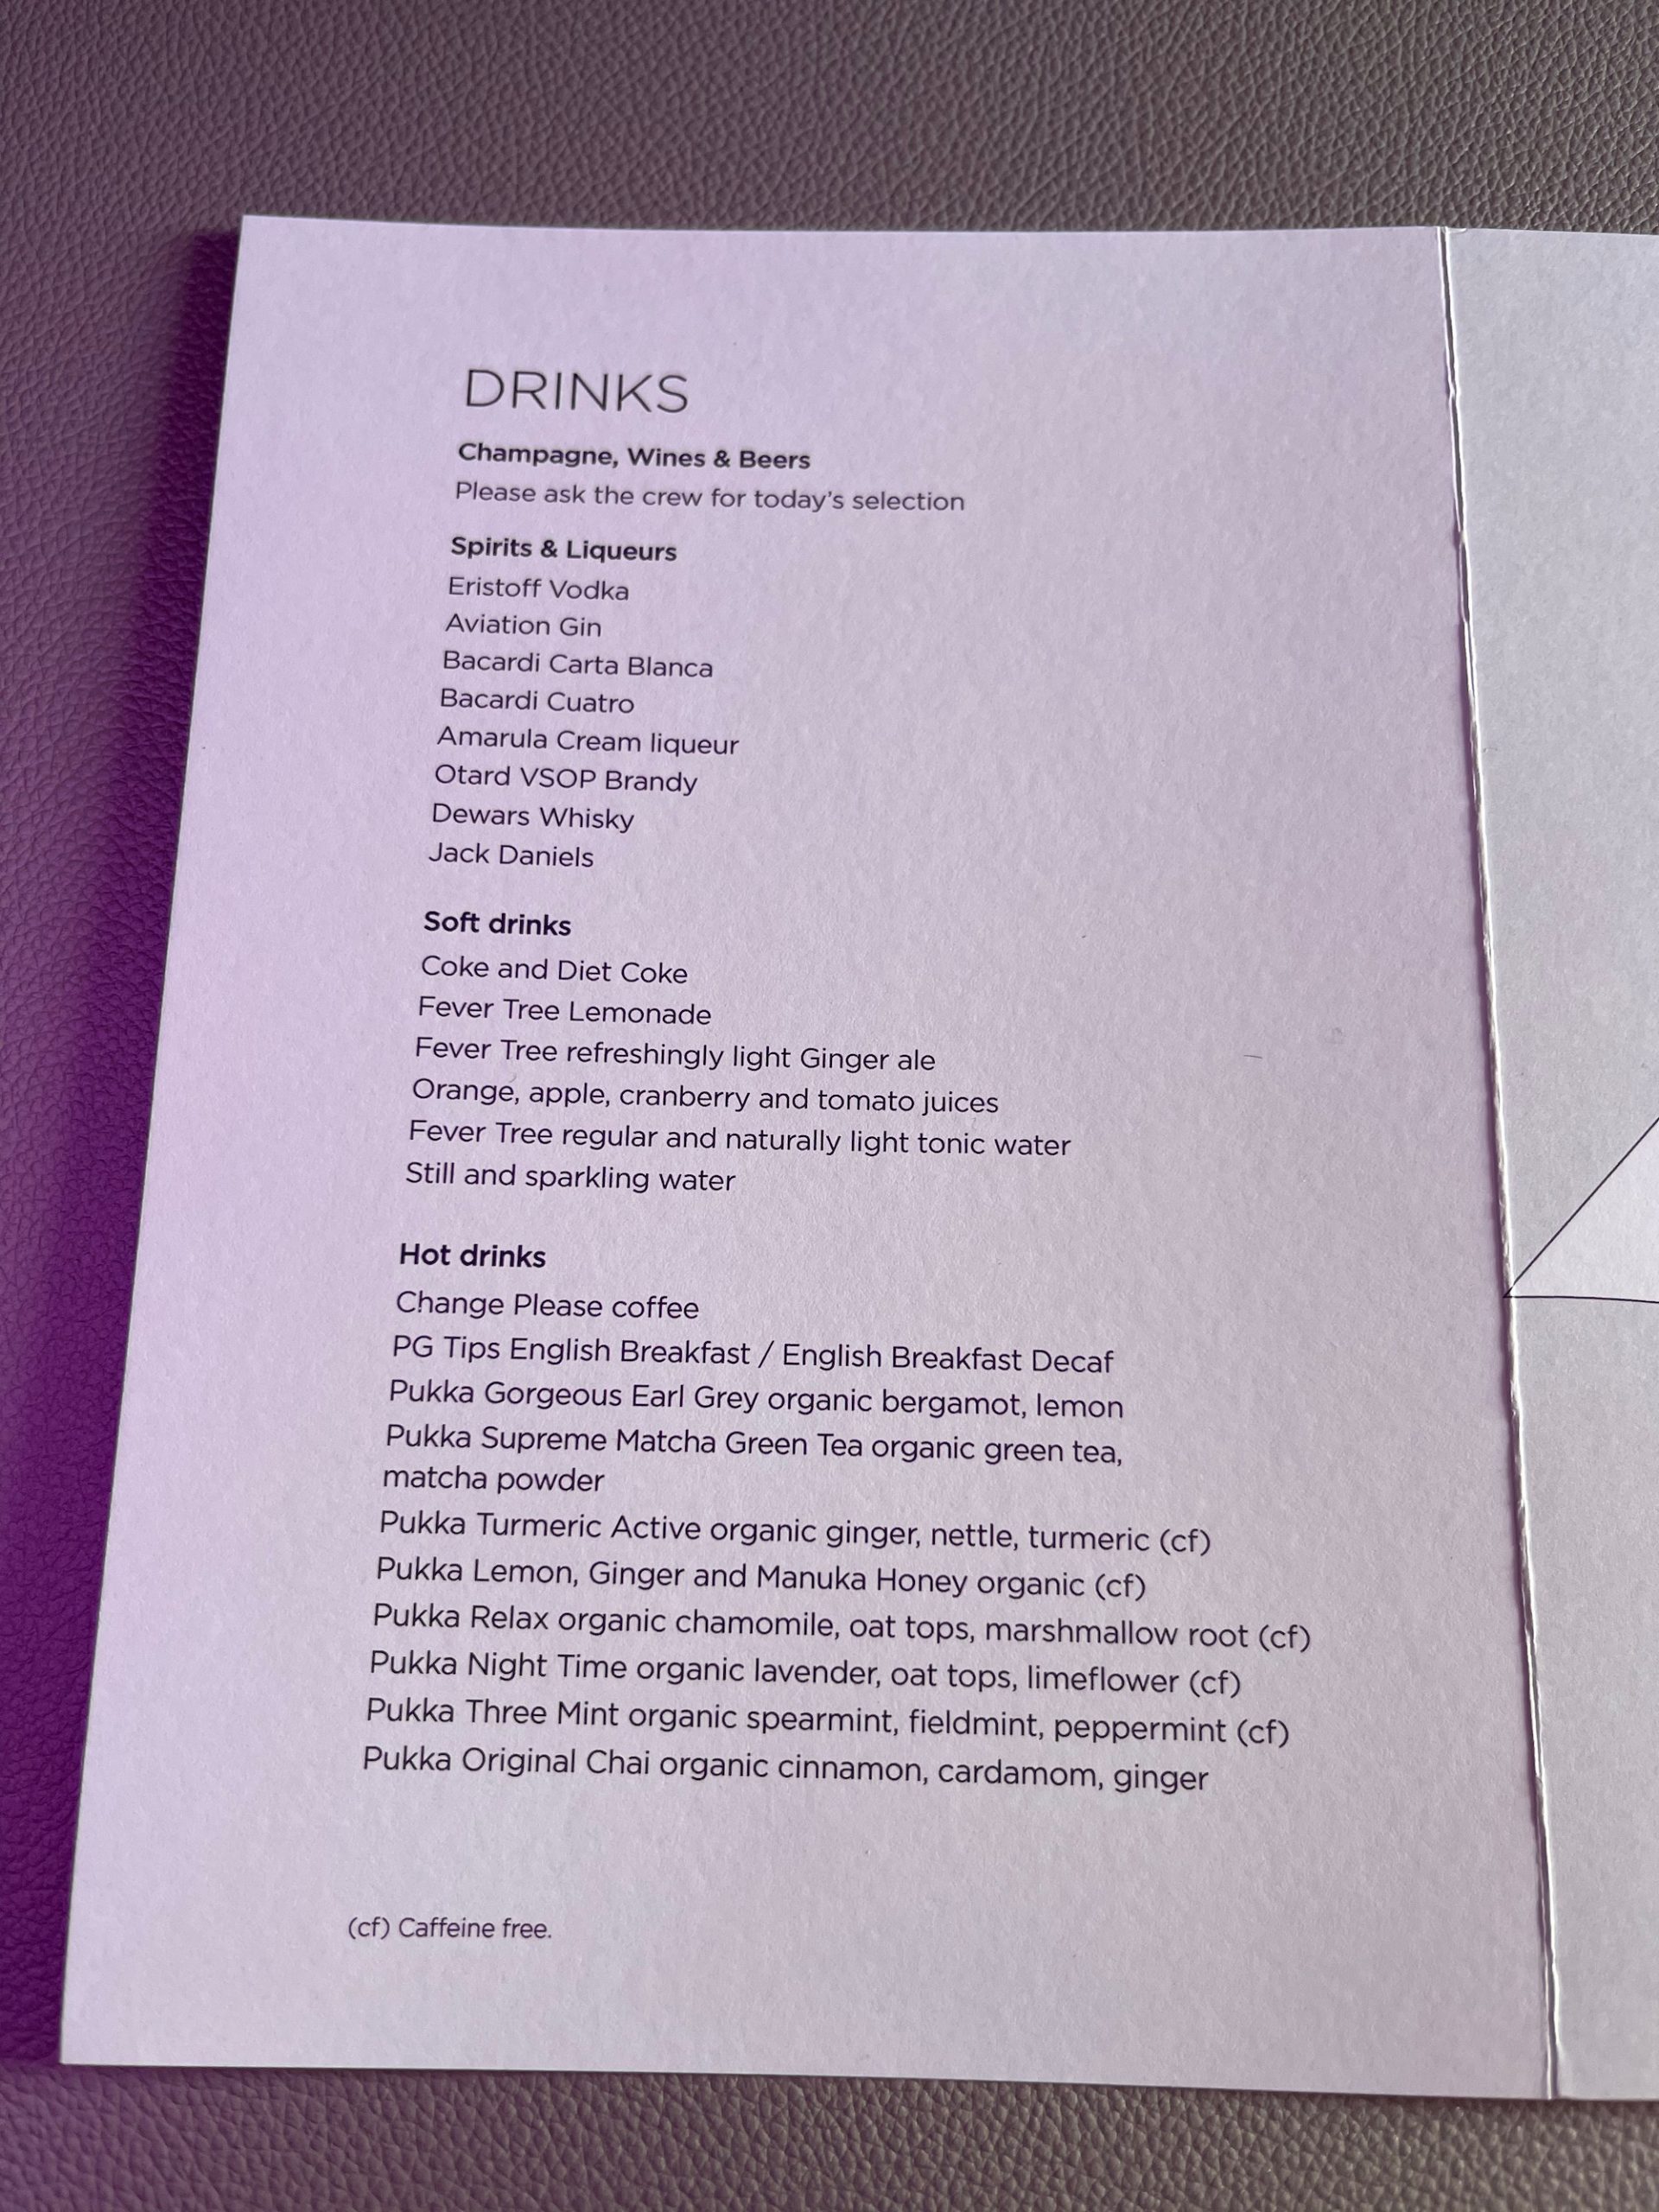 a menu on a purple surface